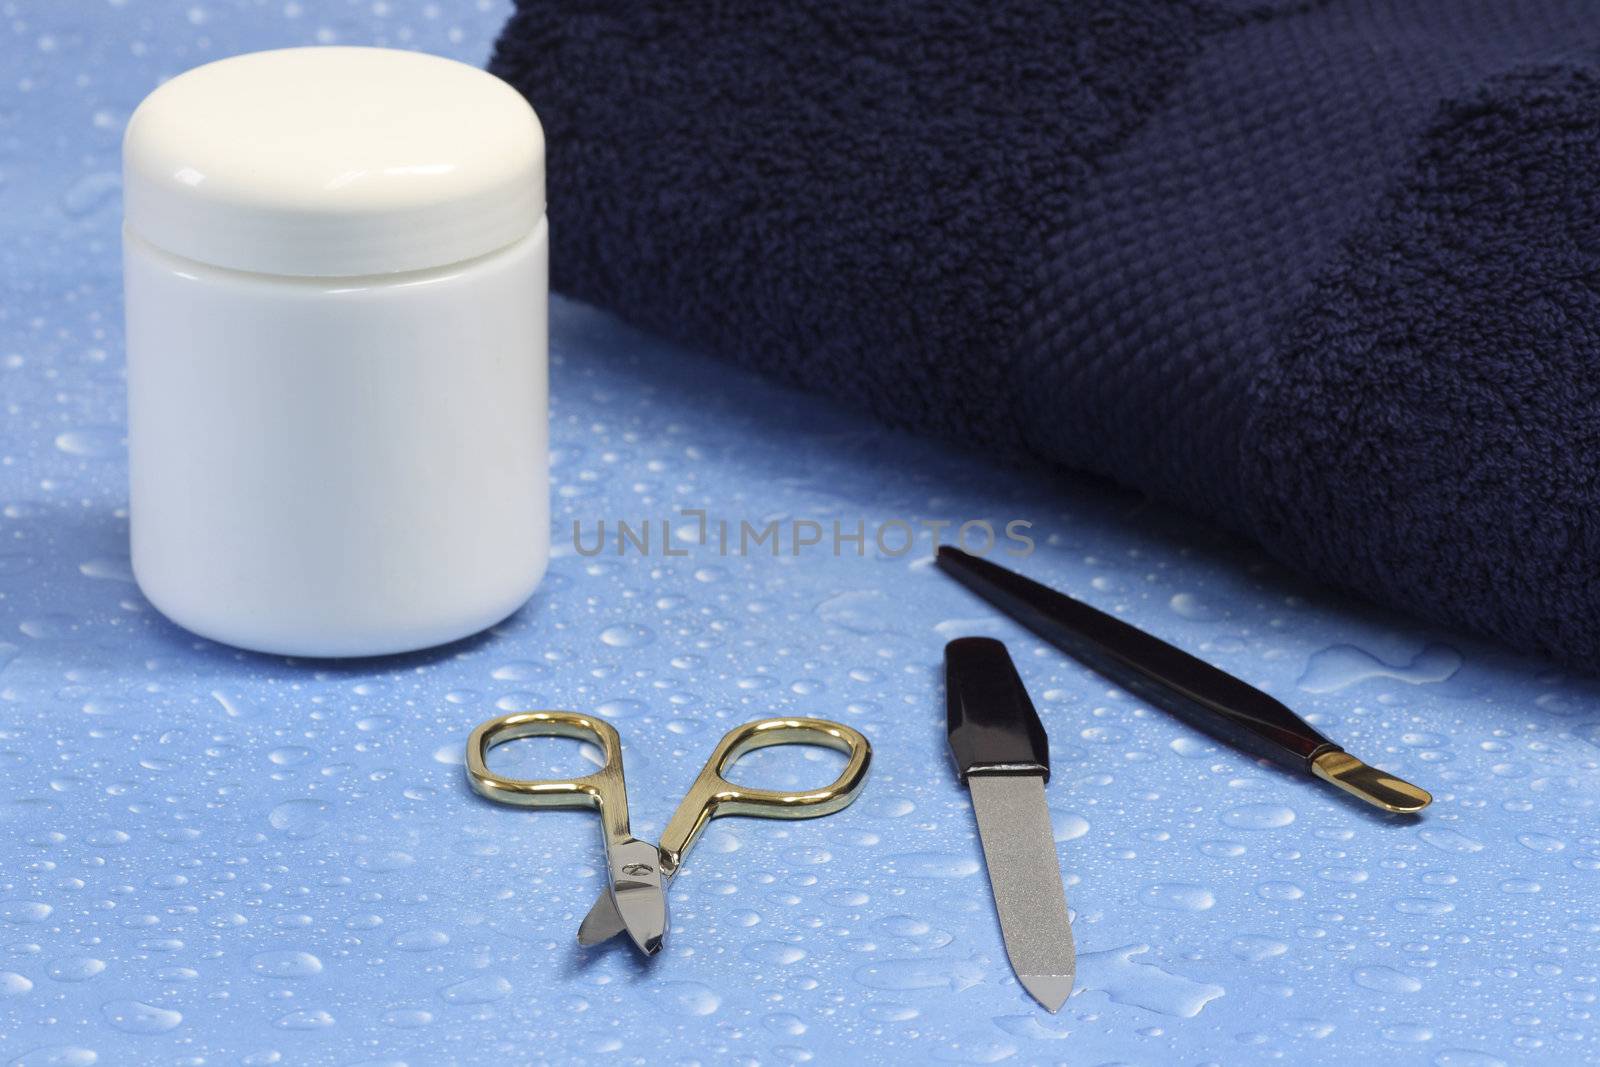 Manicure utensils over blue background